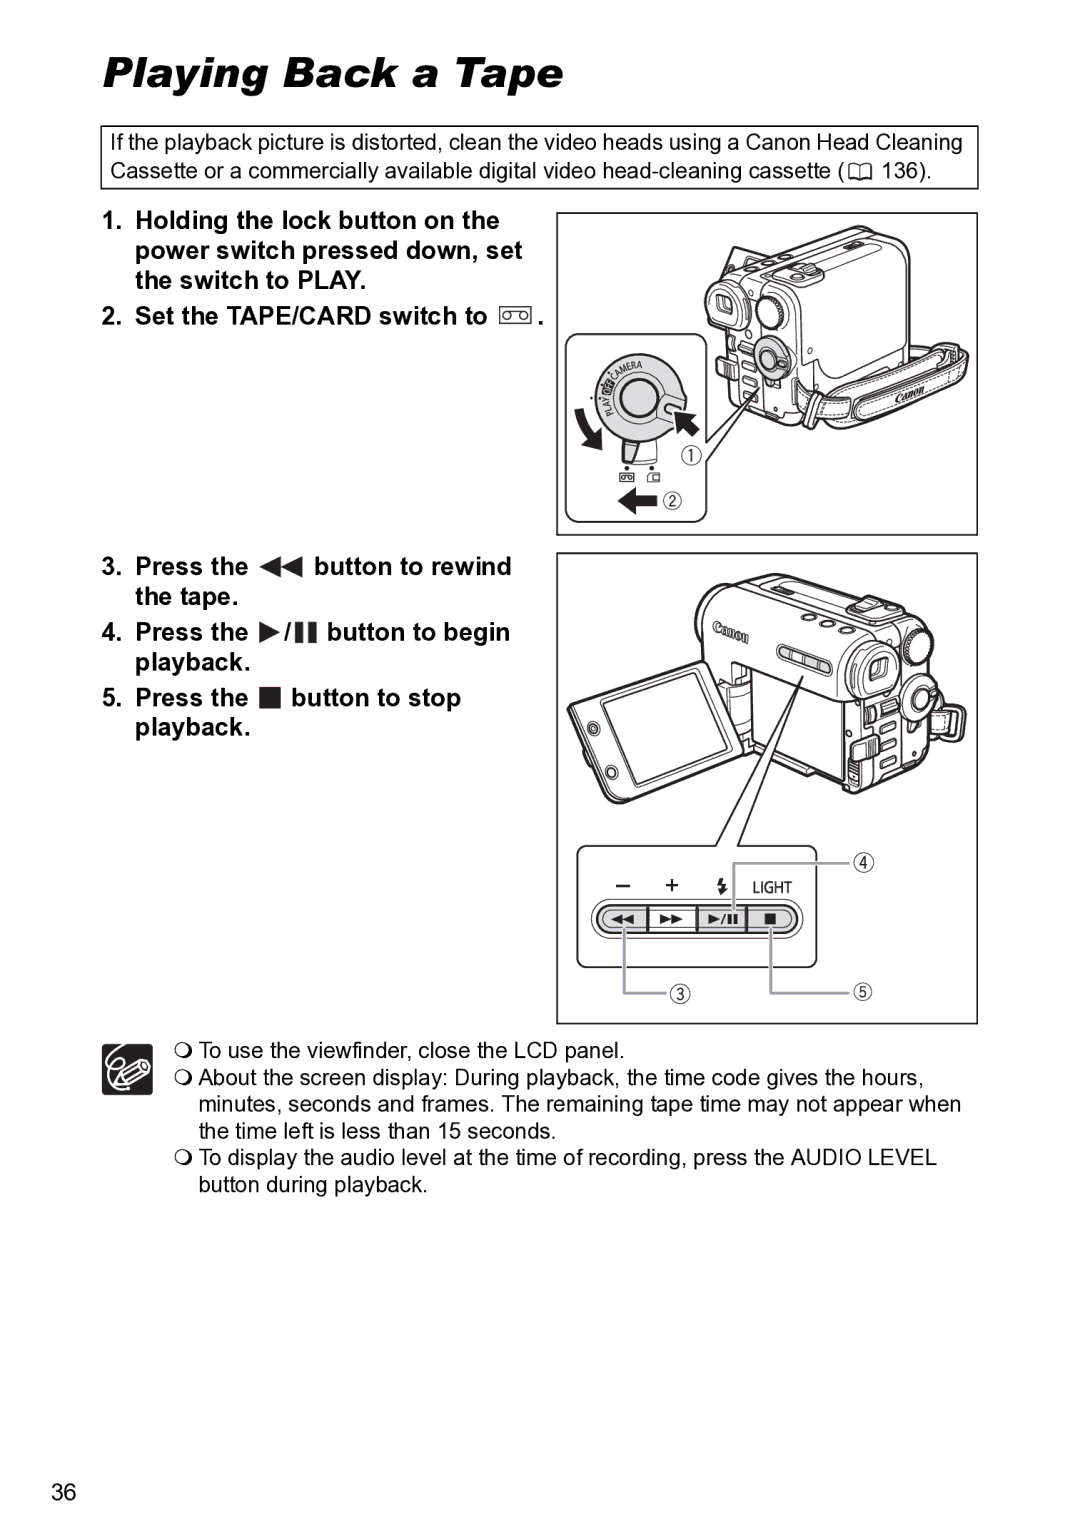 Canon S1 instruction manual PlayinglaybackBack a Tape 